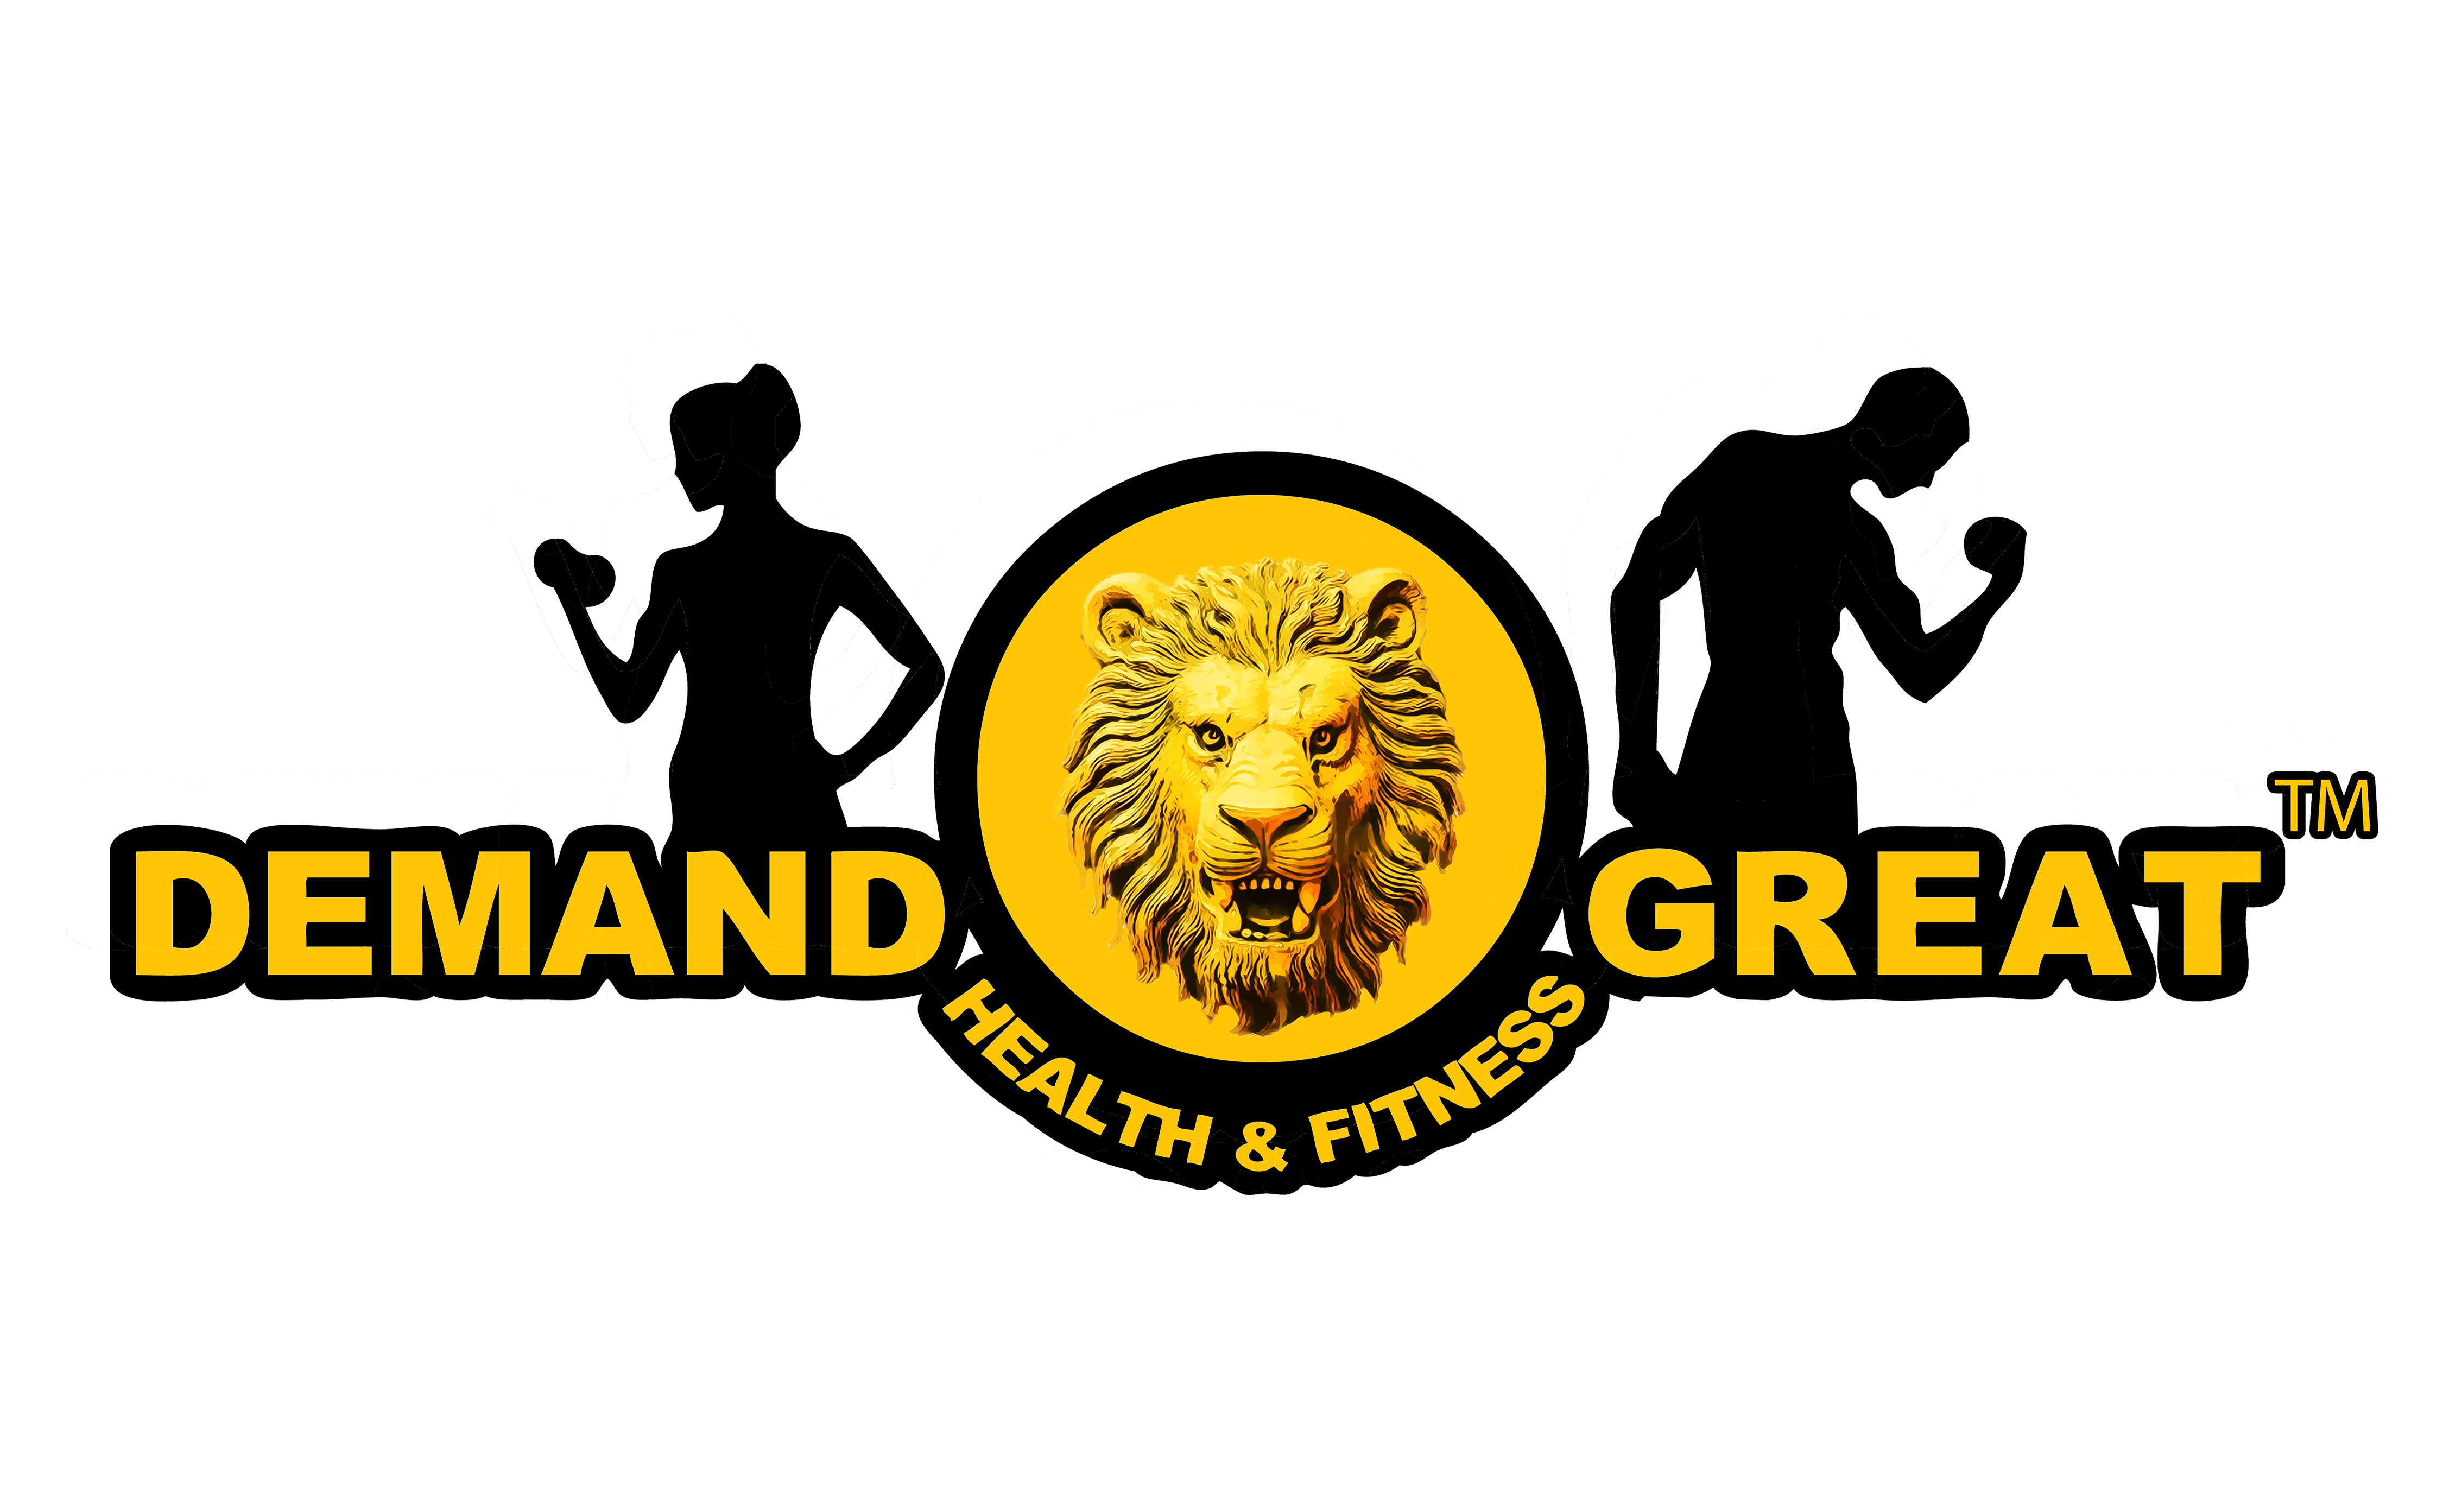 Demand Great Health & Fitness logo